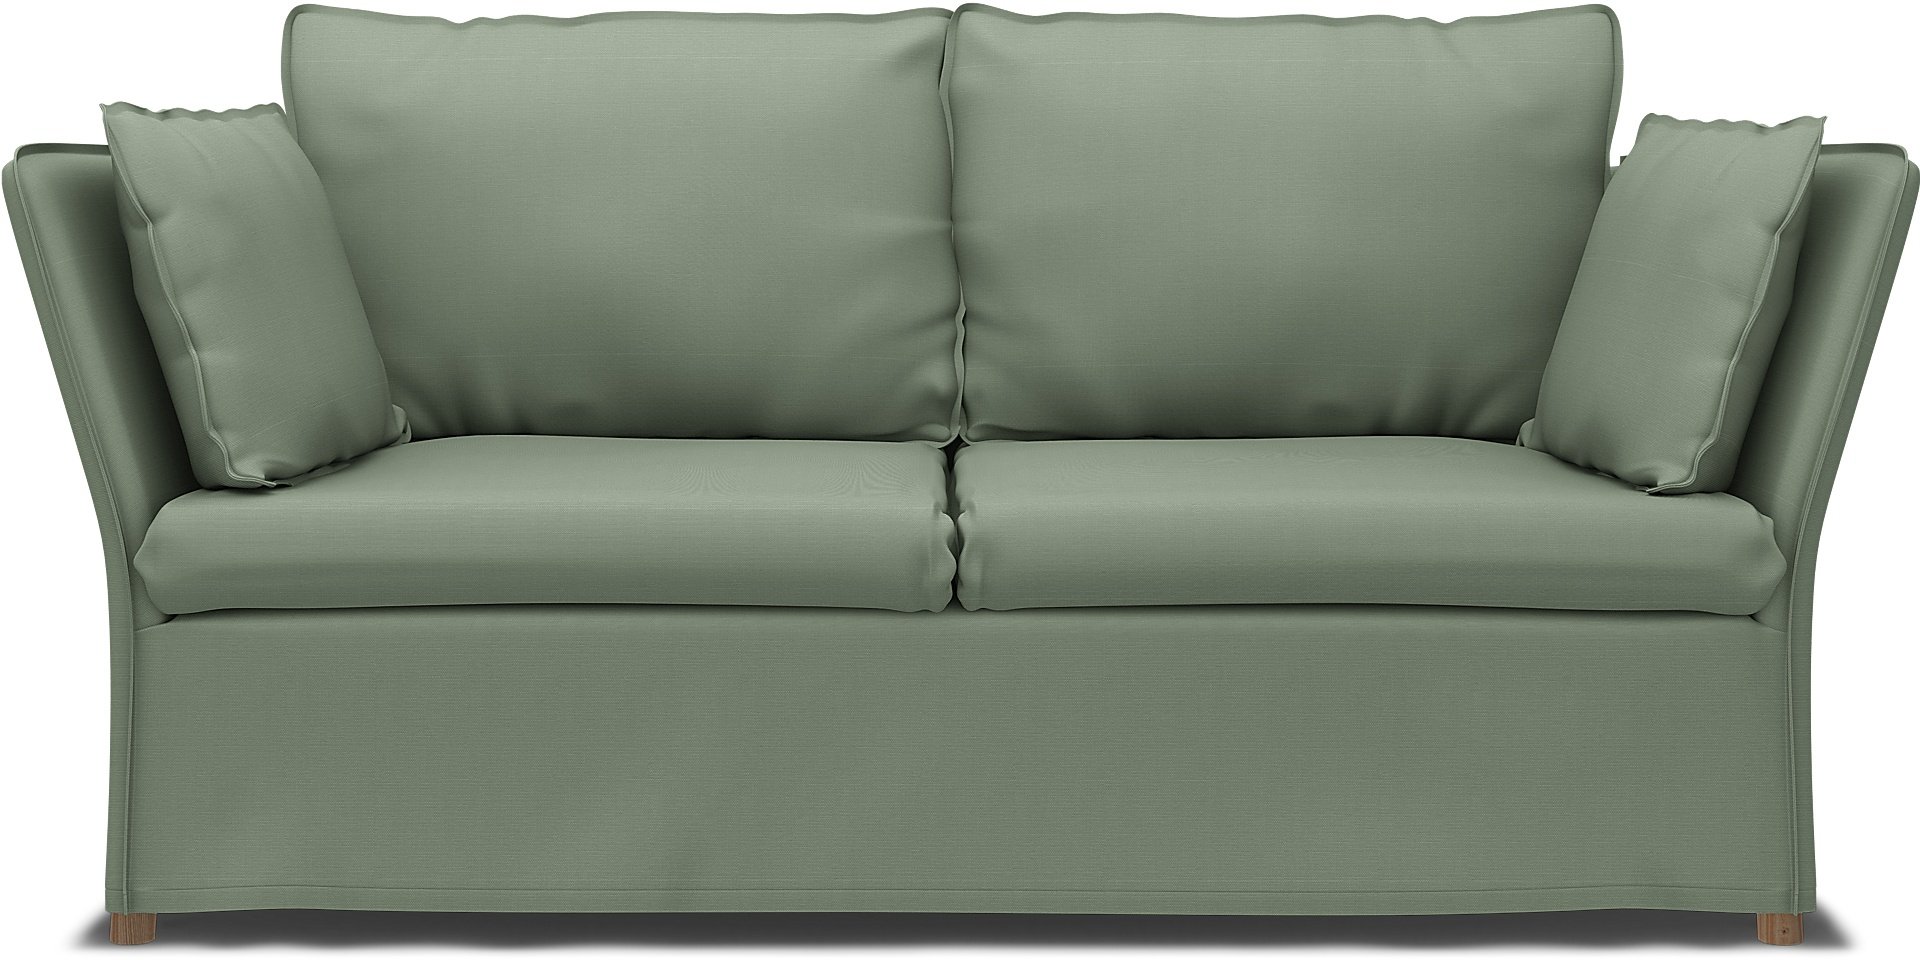 IKEA - Backsalen 2 seater sofa, Seagrass, Cotton - Bemz